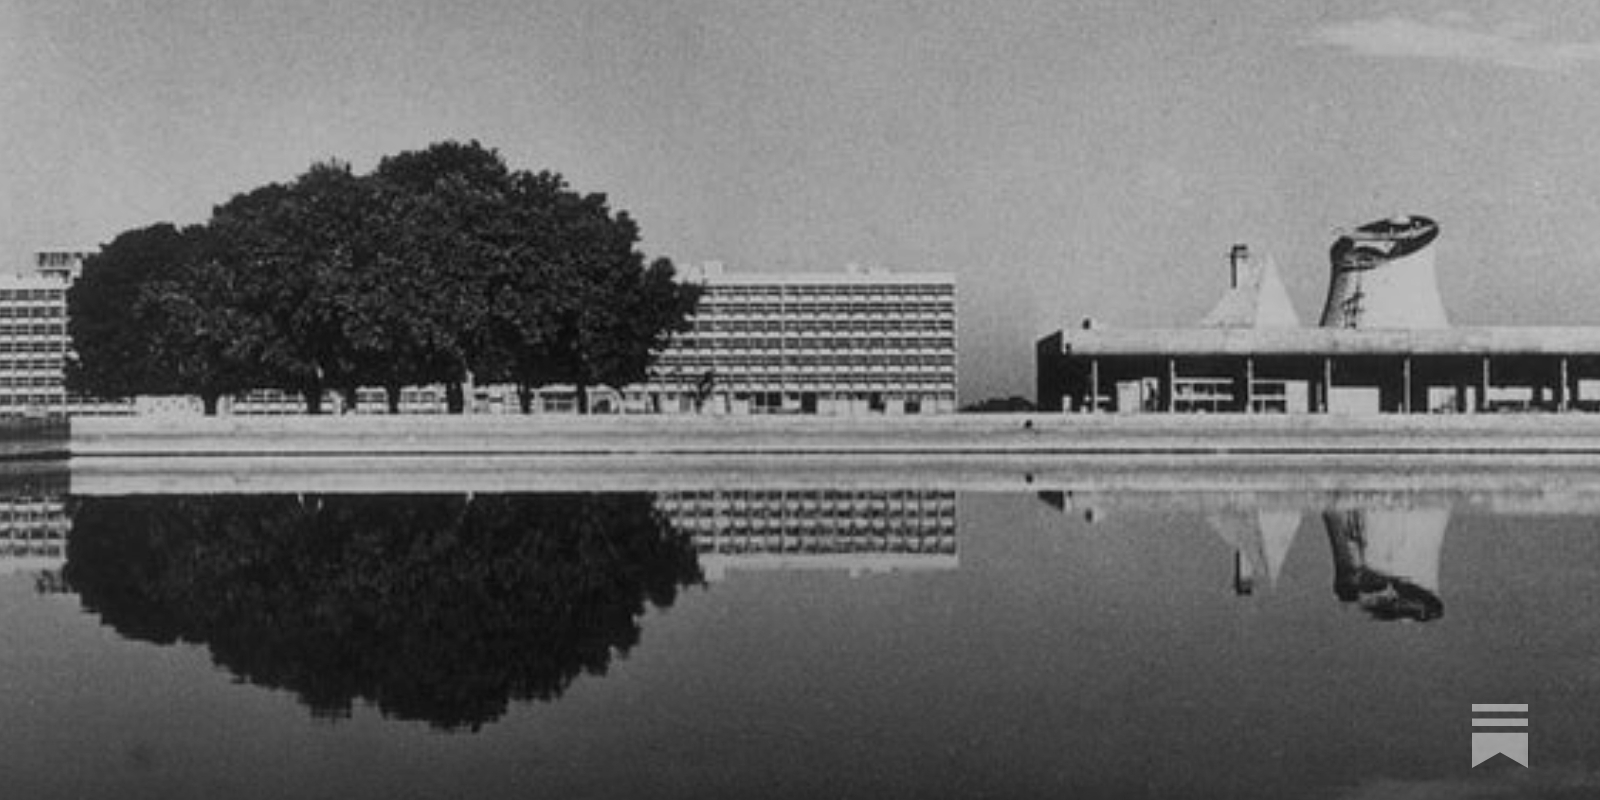 Chandigarh - The Chandigarh's Monumental Modernism - Artchitectours